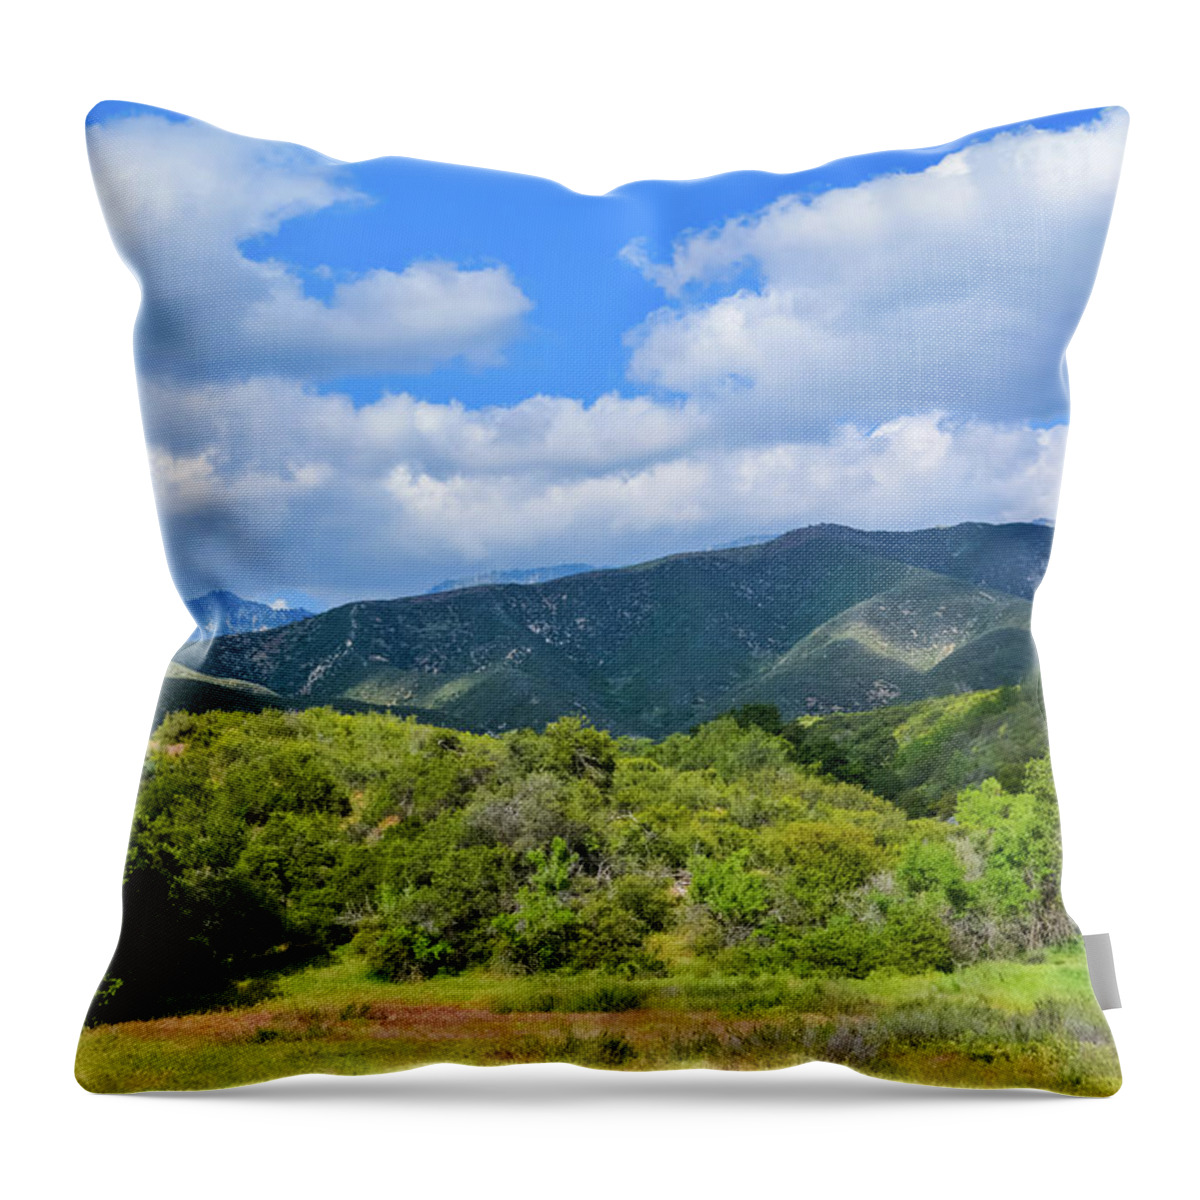 Wildwood Canyon State Park Throw Pillow featuring the photograph Wildwood Canyon State Park by Kyle Hanson